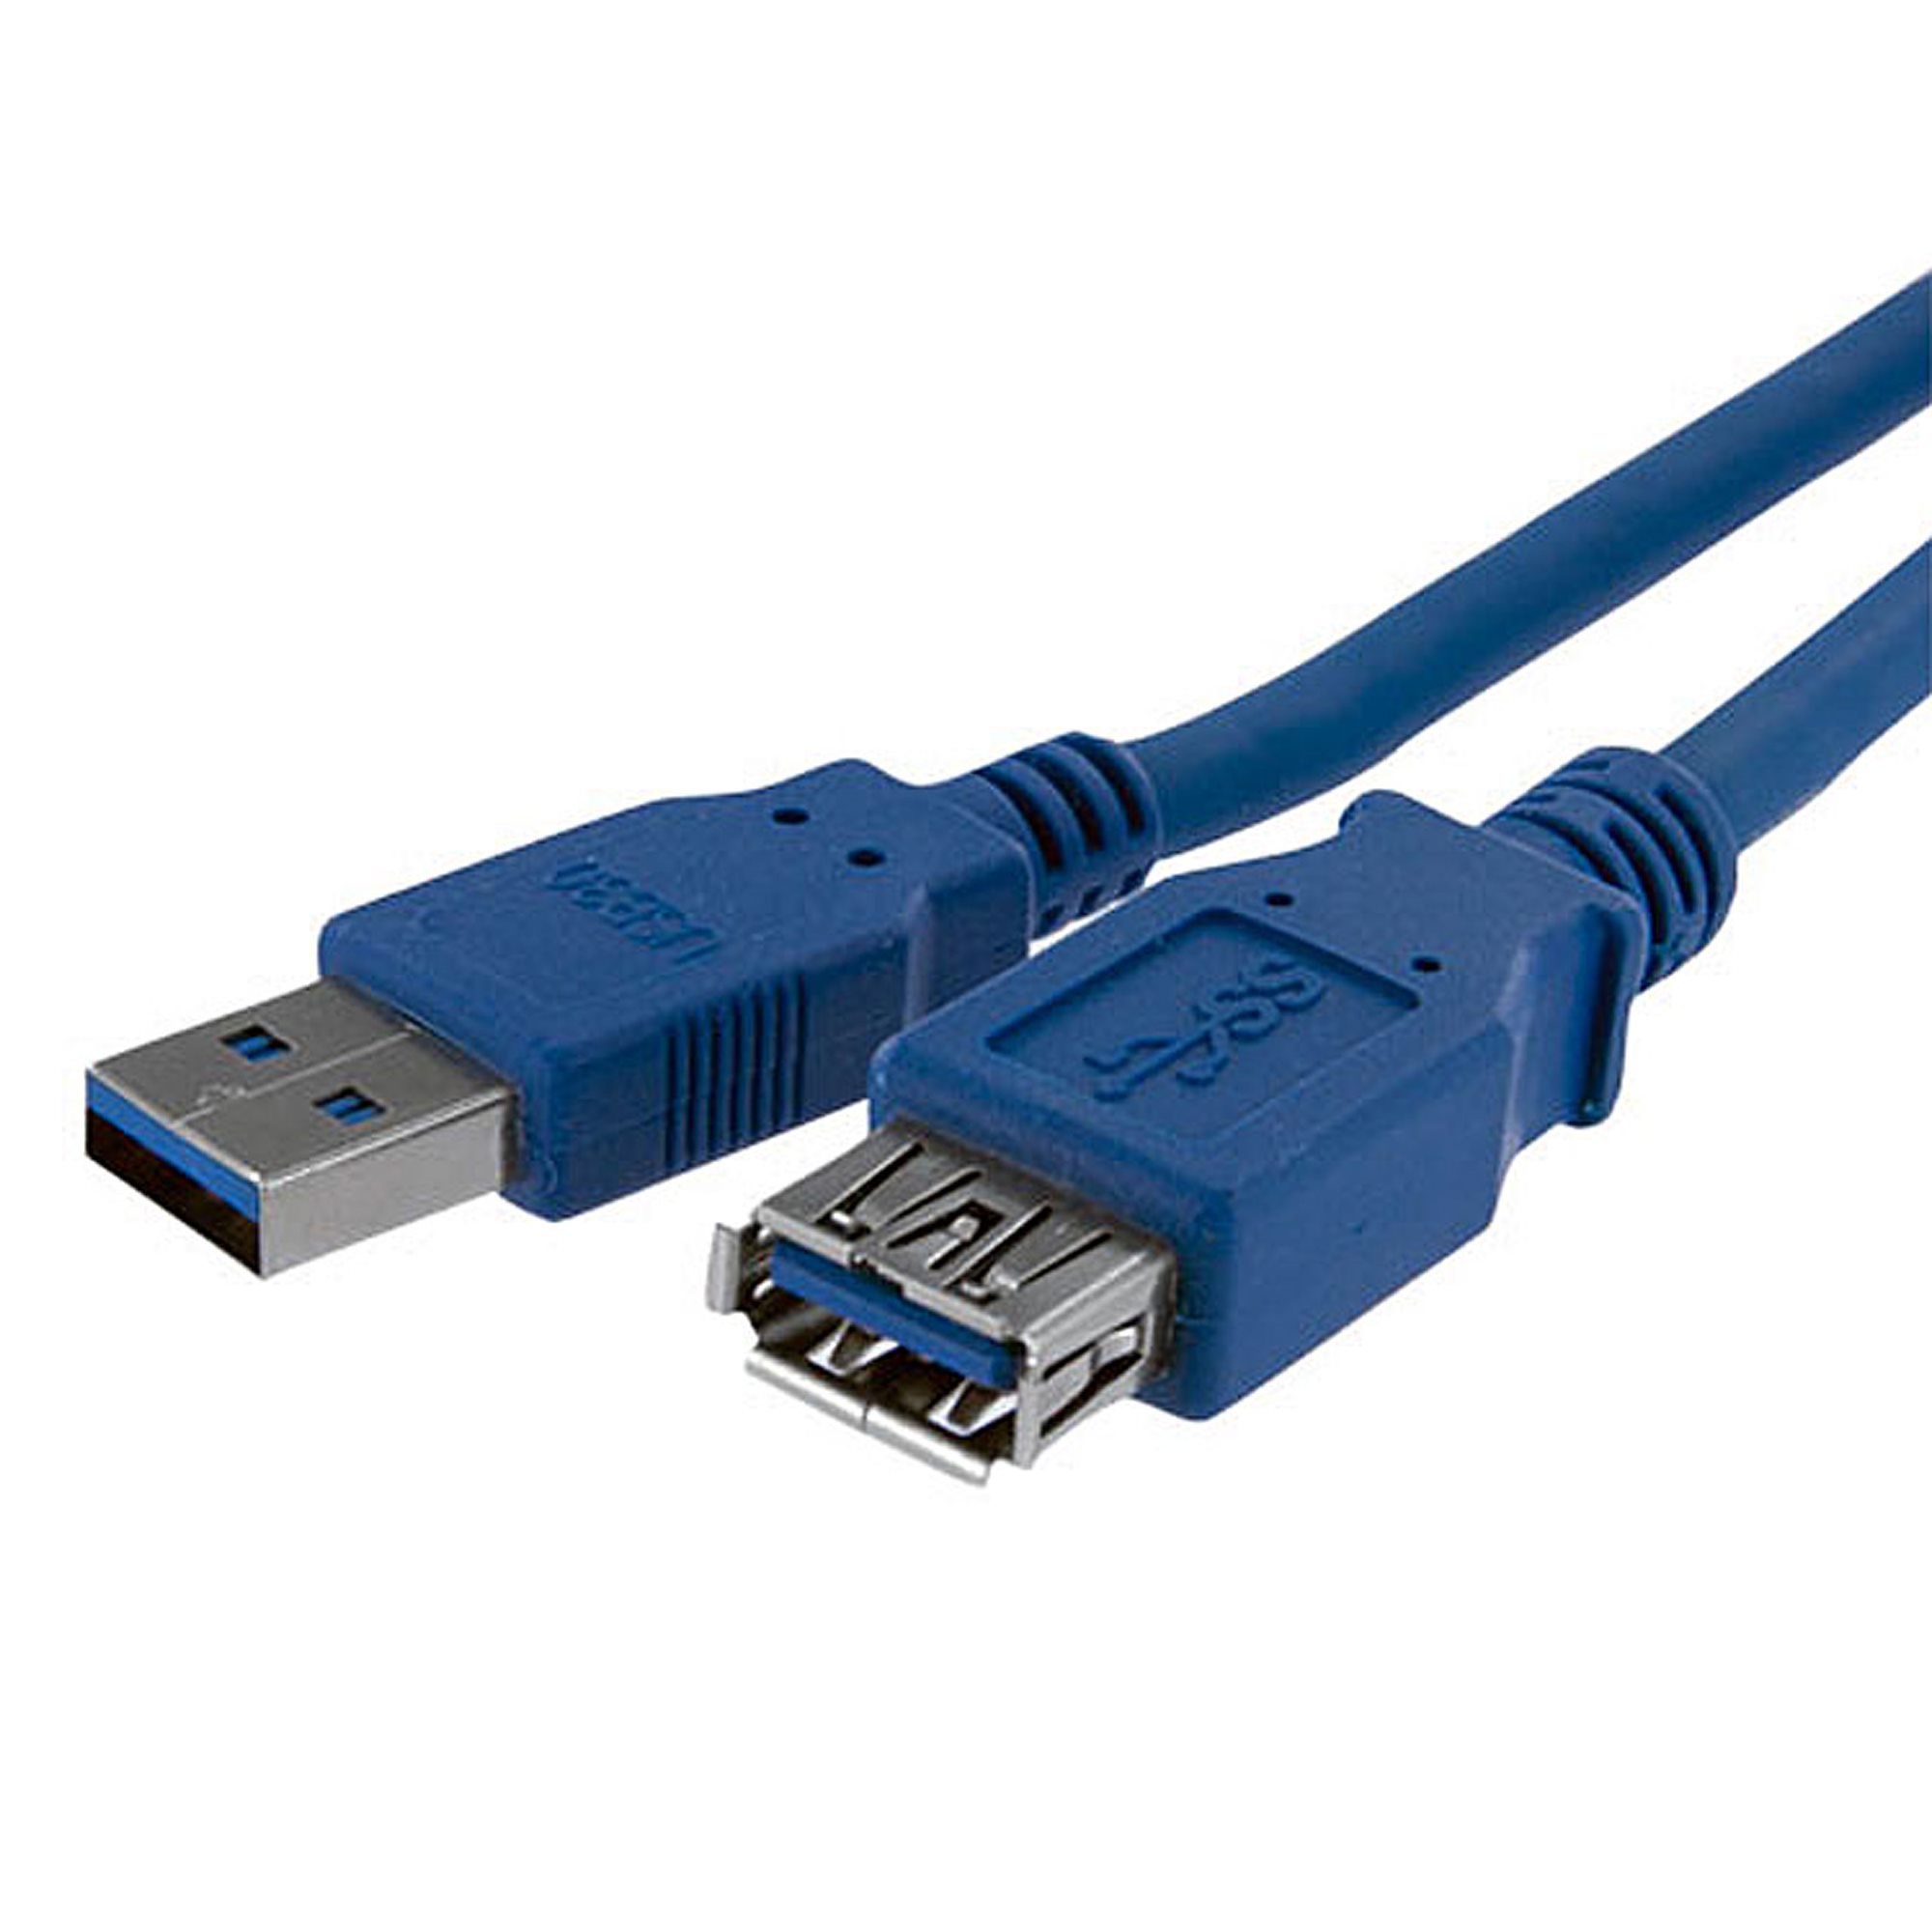 Leesbaarheid praktijk Trojaanse paard 1m Blue USB 3.0 Extension Cable M/F - USB 3.0-kabels | StarTech.com  Nederland